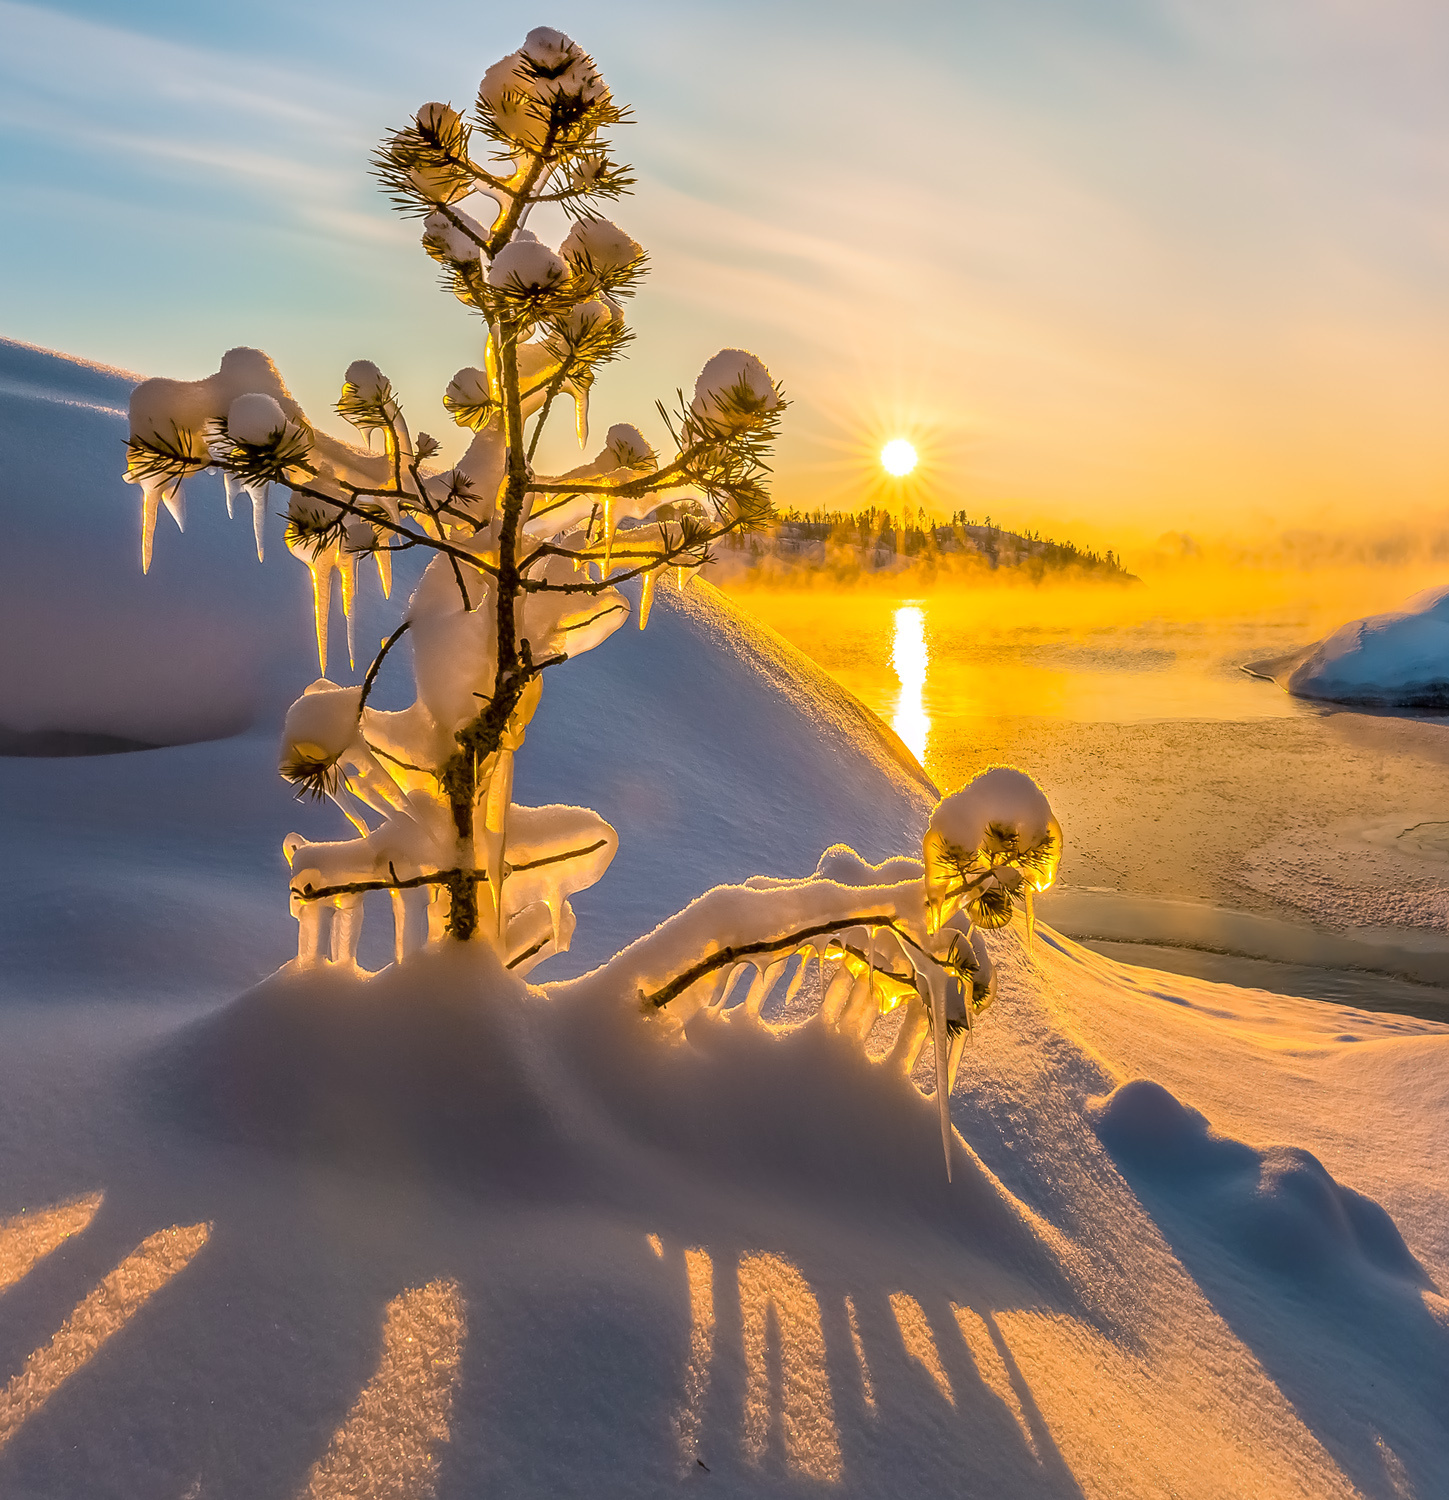 Творчество Ладоги Ладожское озеро Карелия зима снег солнце фототур лёд рассвет туман облака фактура сосна дерево